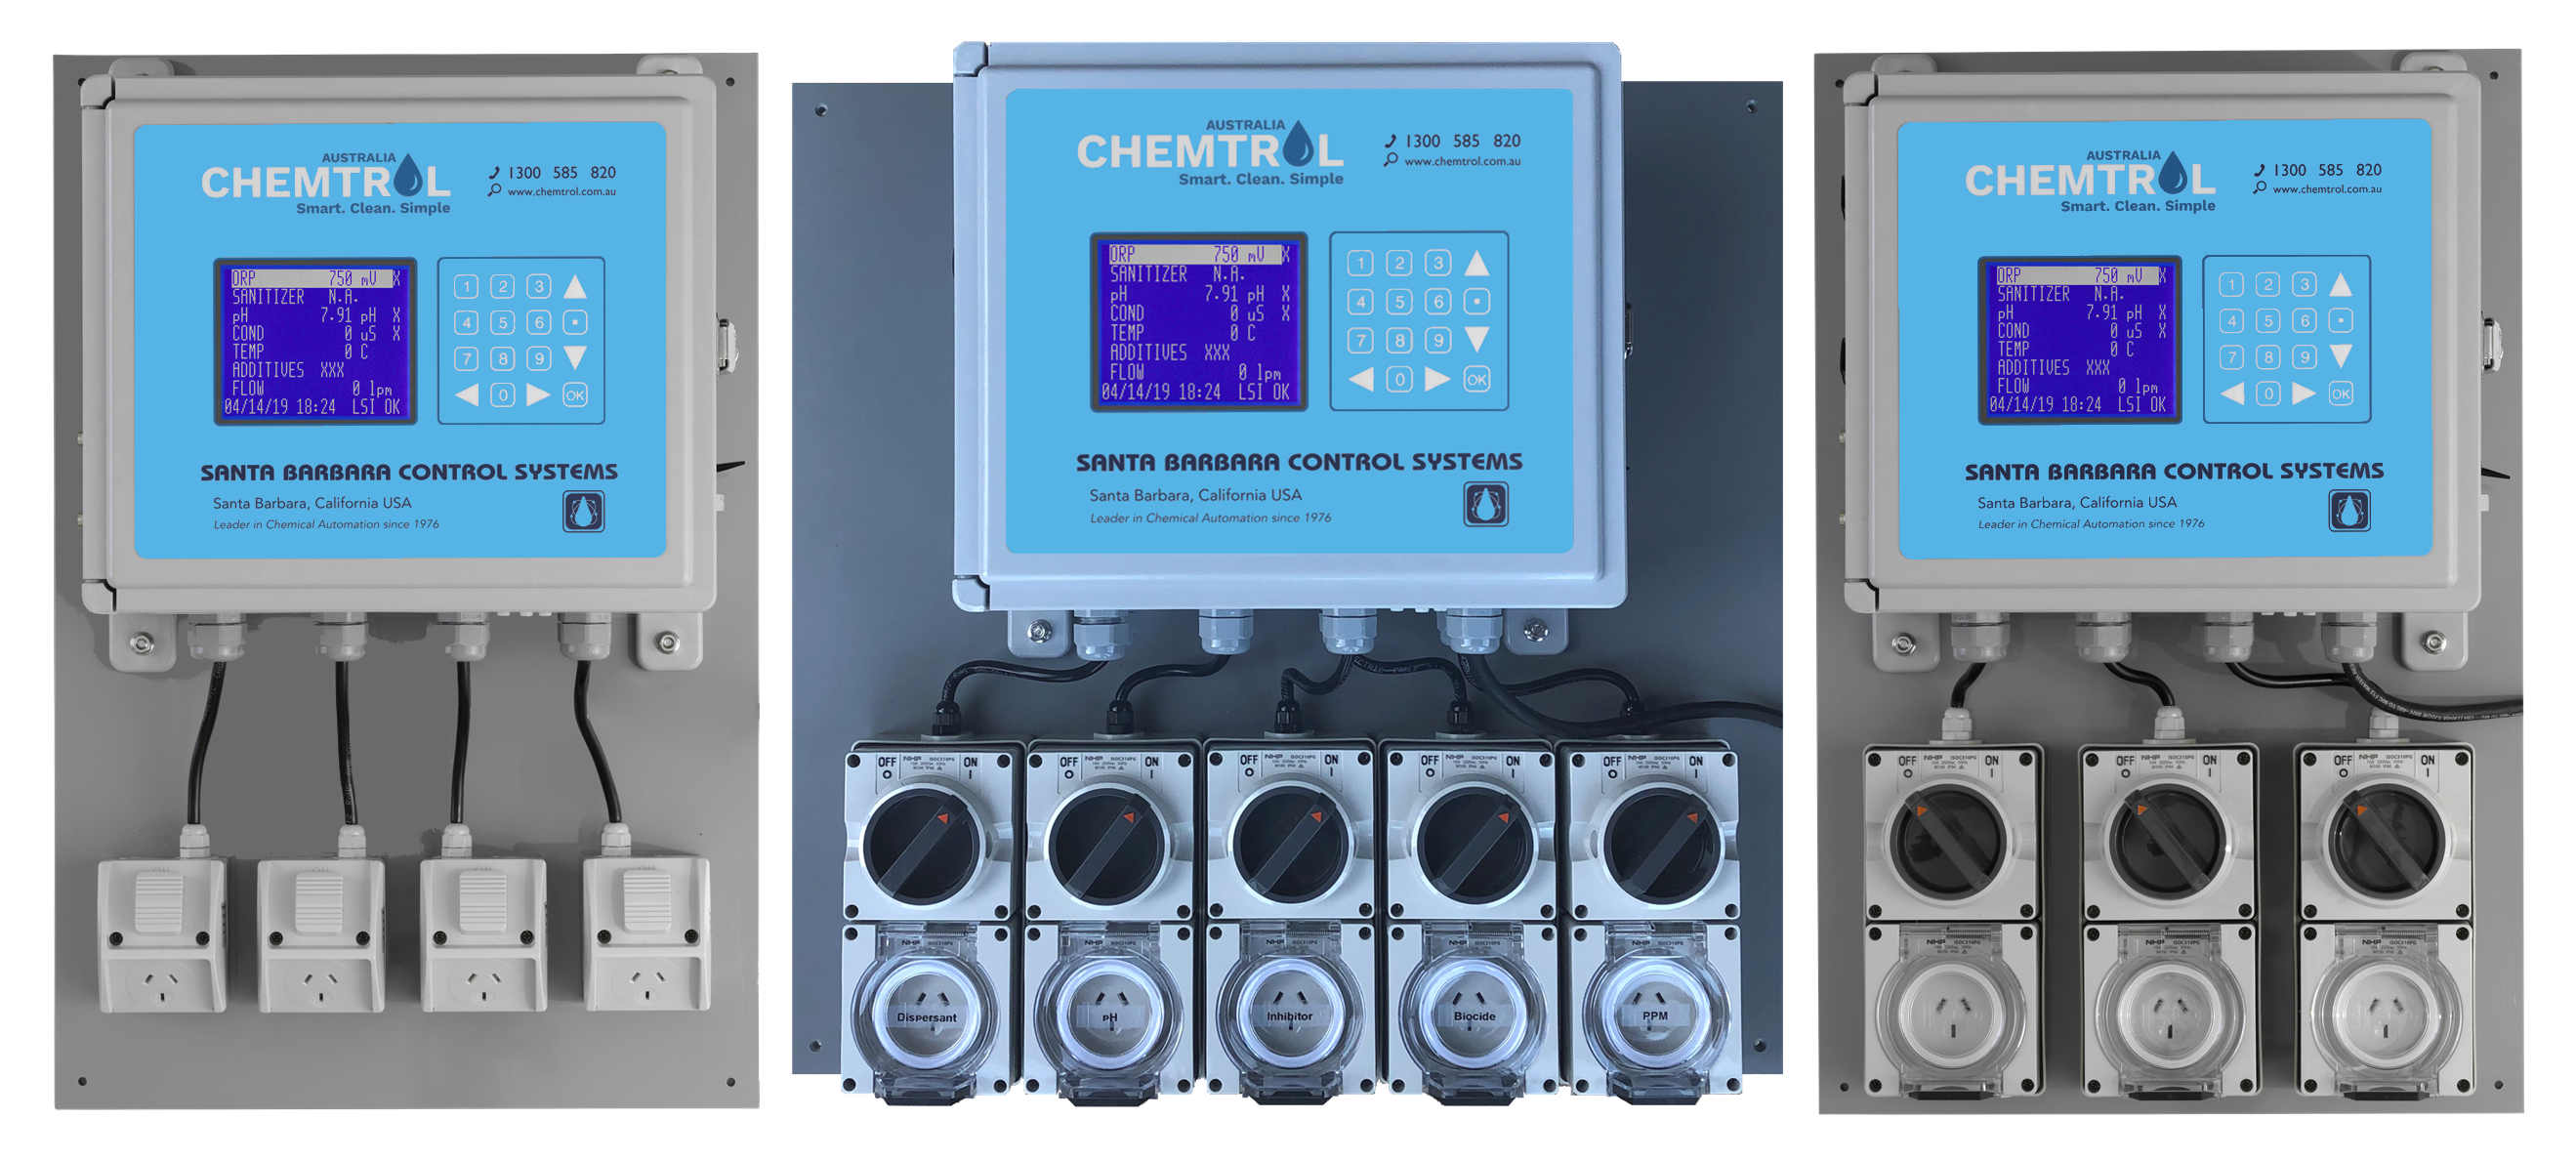 CHEMTROL® Industrial controller setup - Image